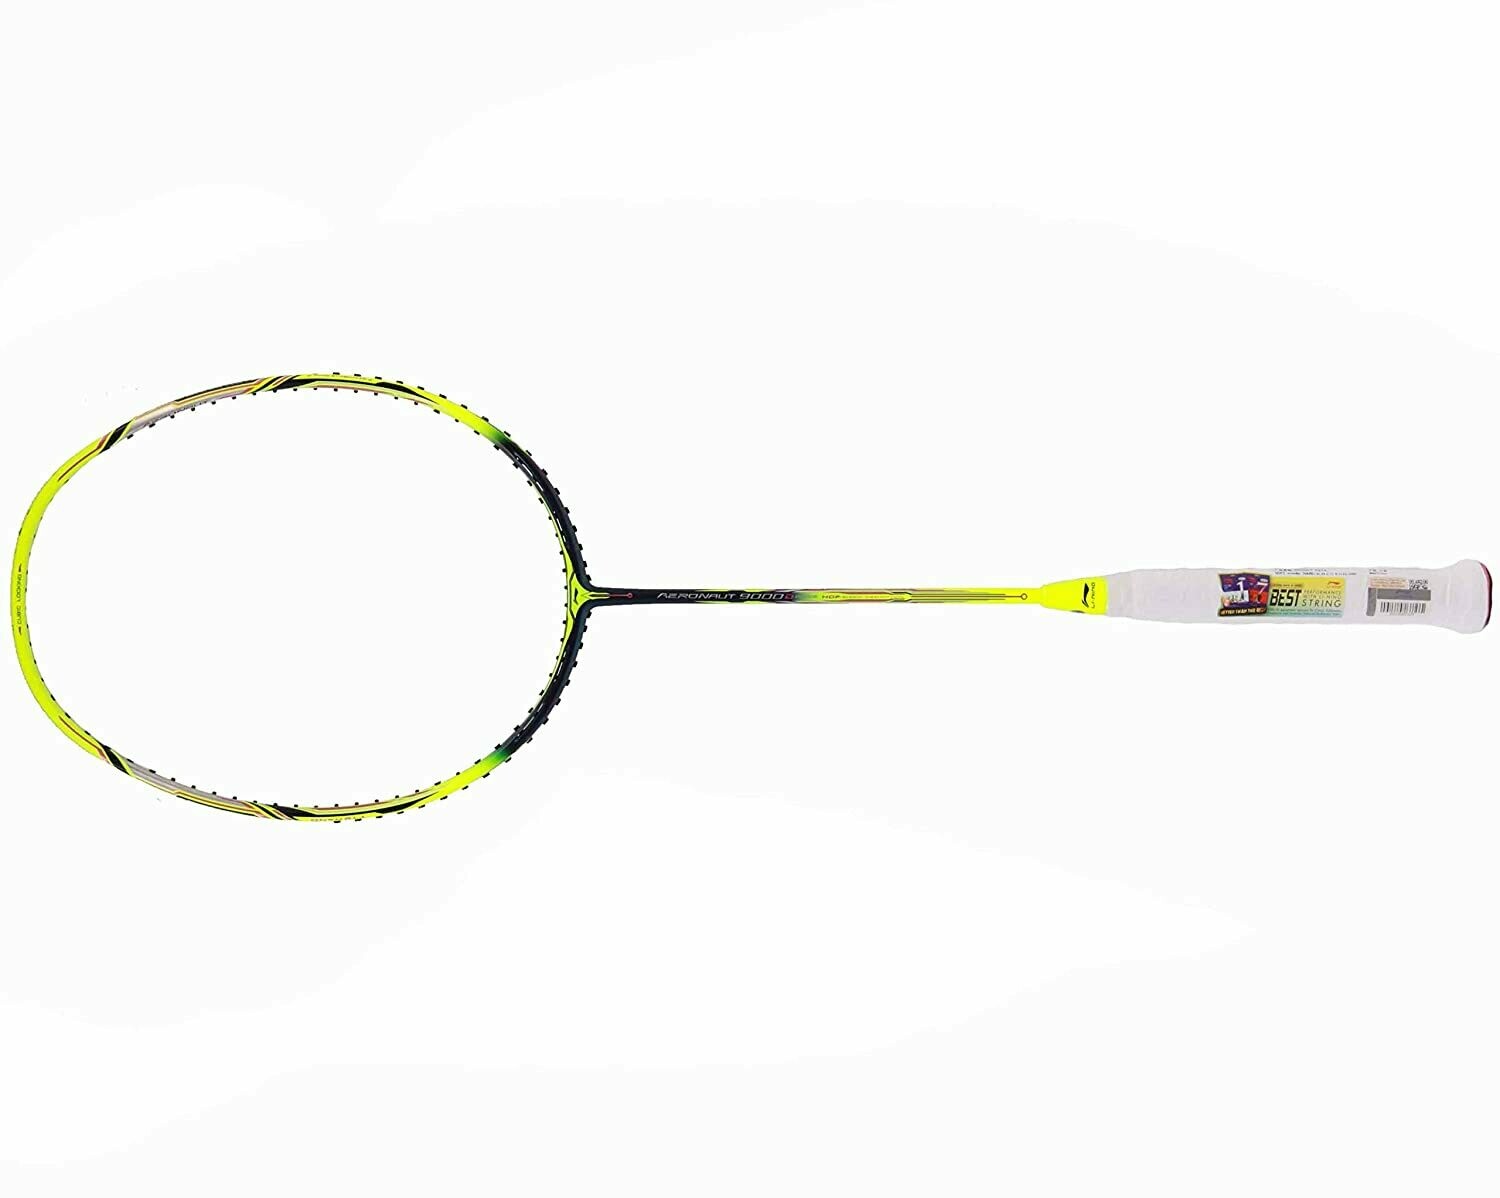 LI-NING Aeronaut 9000 D-DRIVE  Badminton Racquet